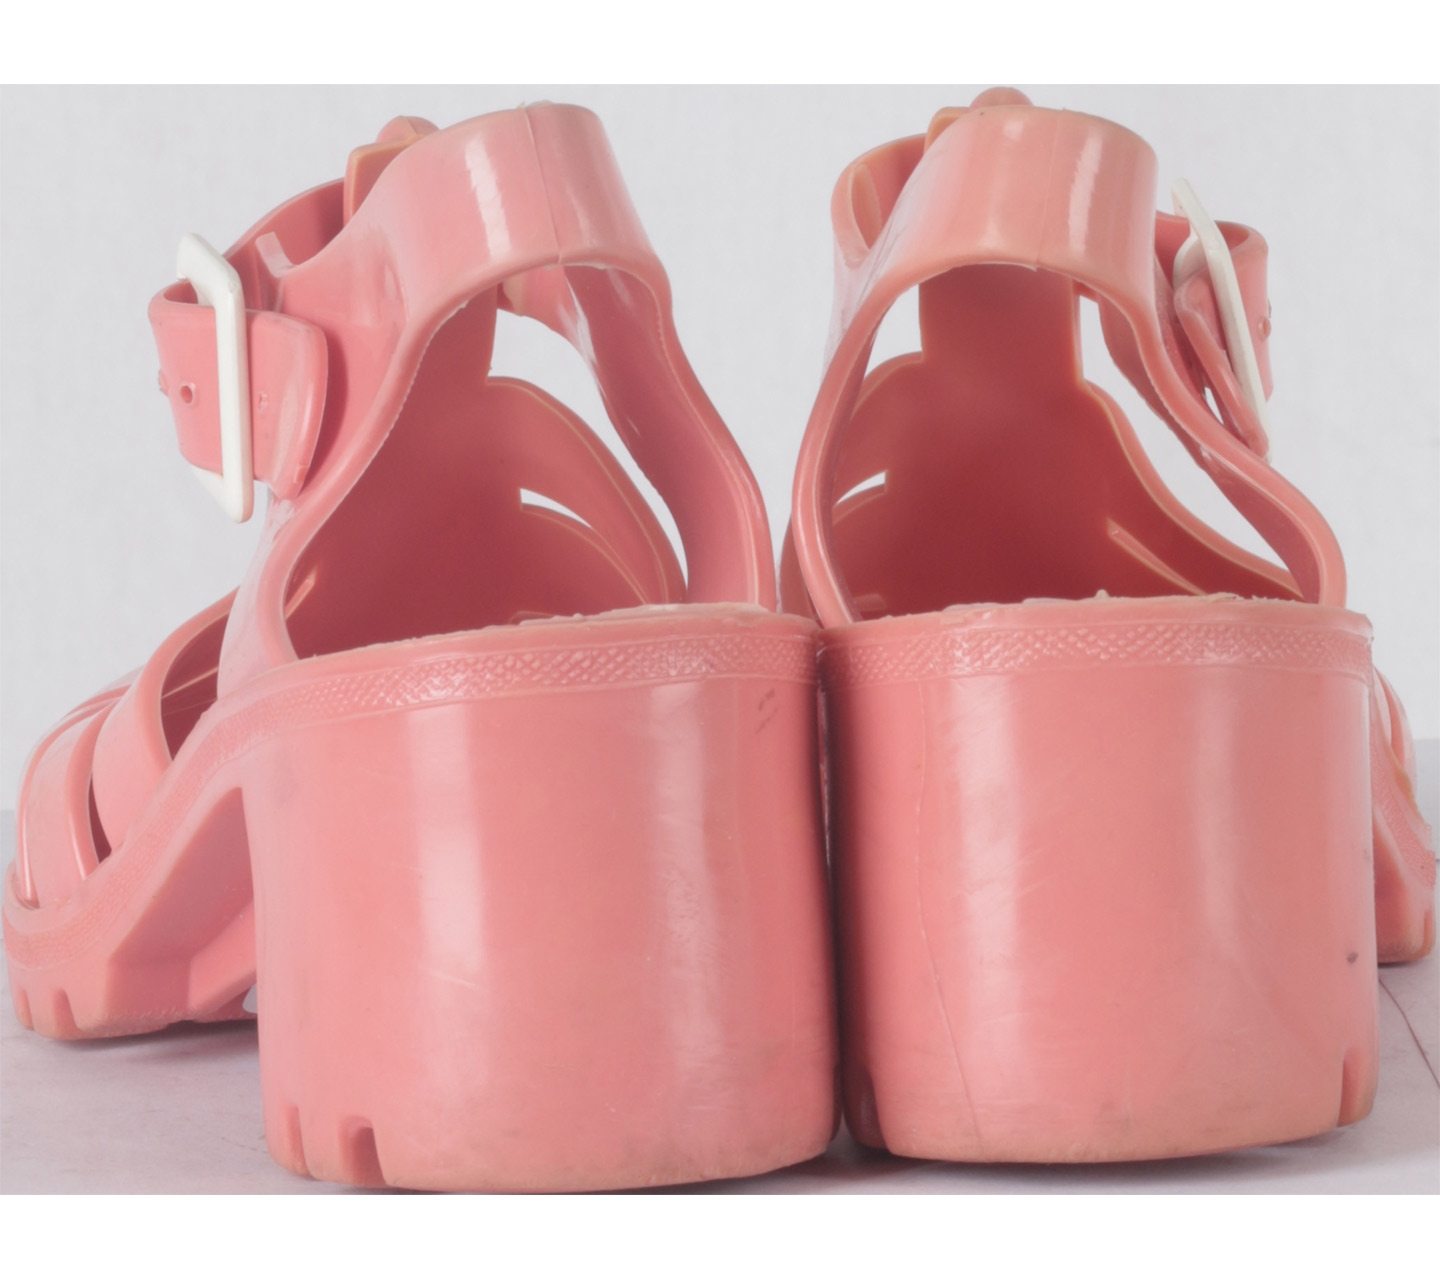 Juju Pink Sandals